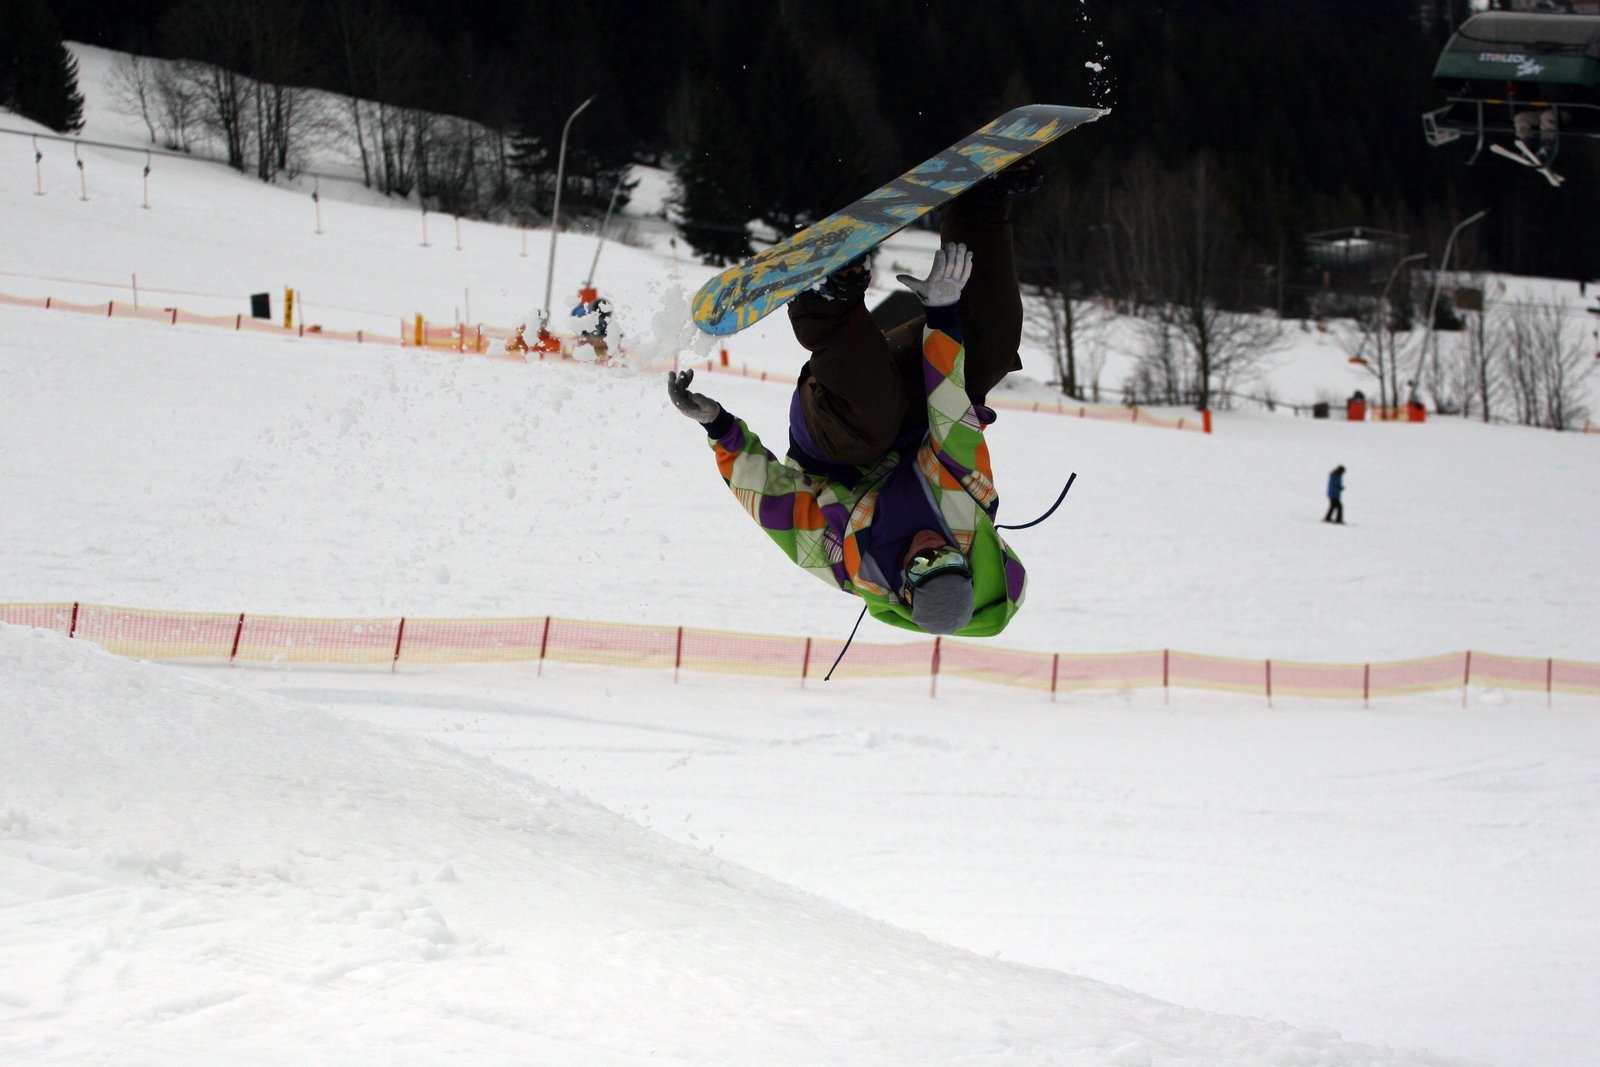 Snowboard frontflip #1